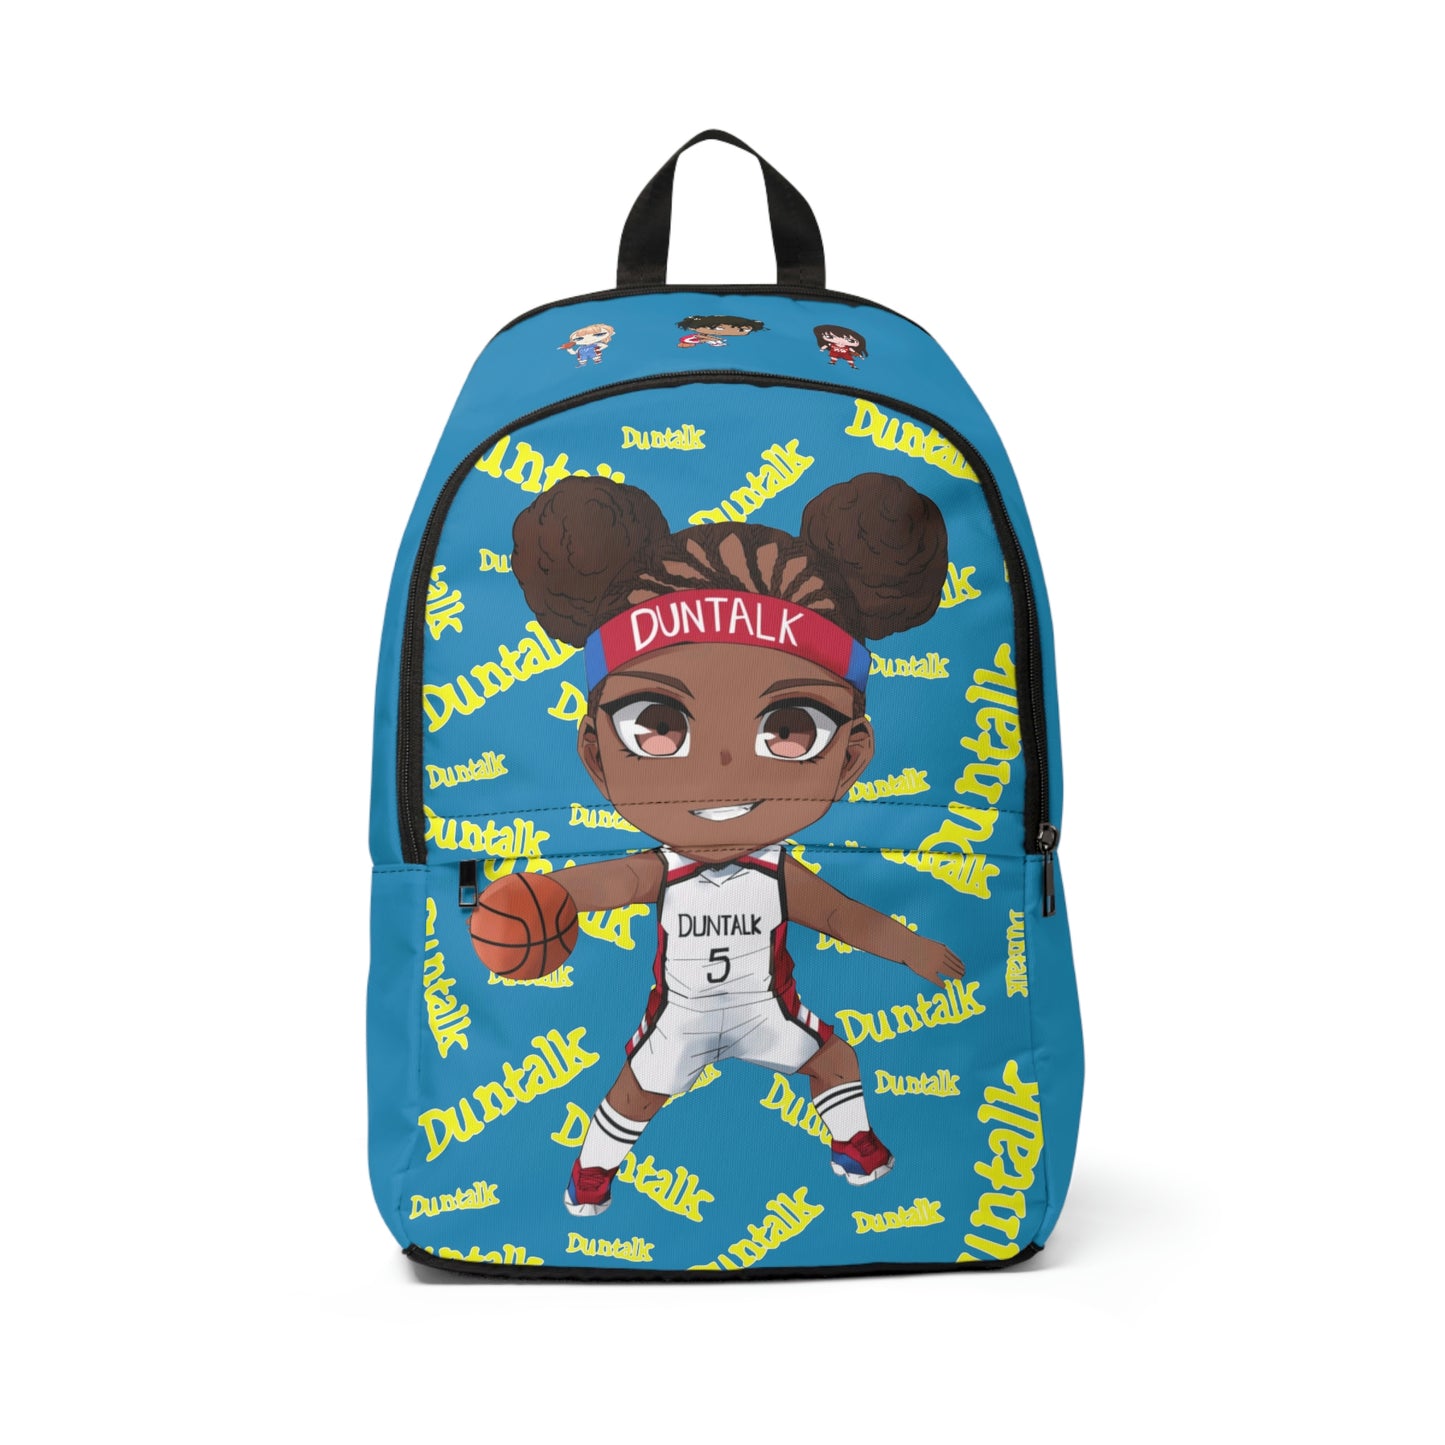 Duntalk "Squad" Girls' Basketball Backpack - Small